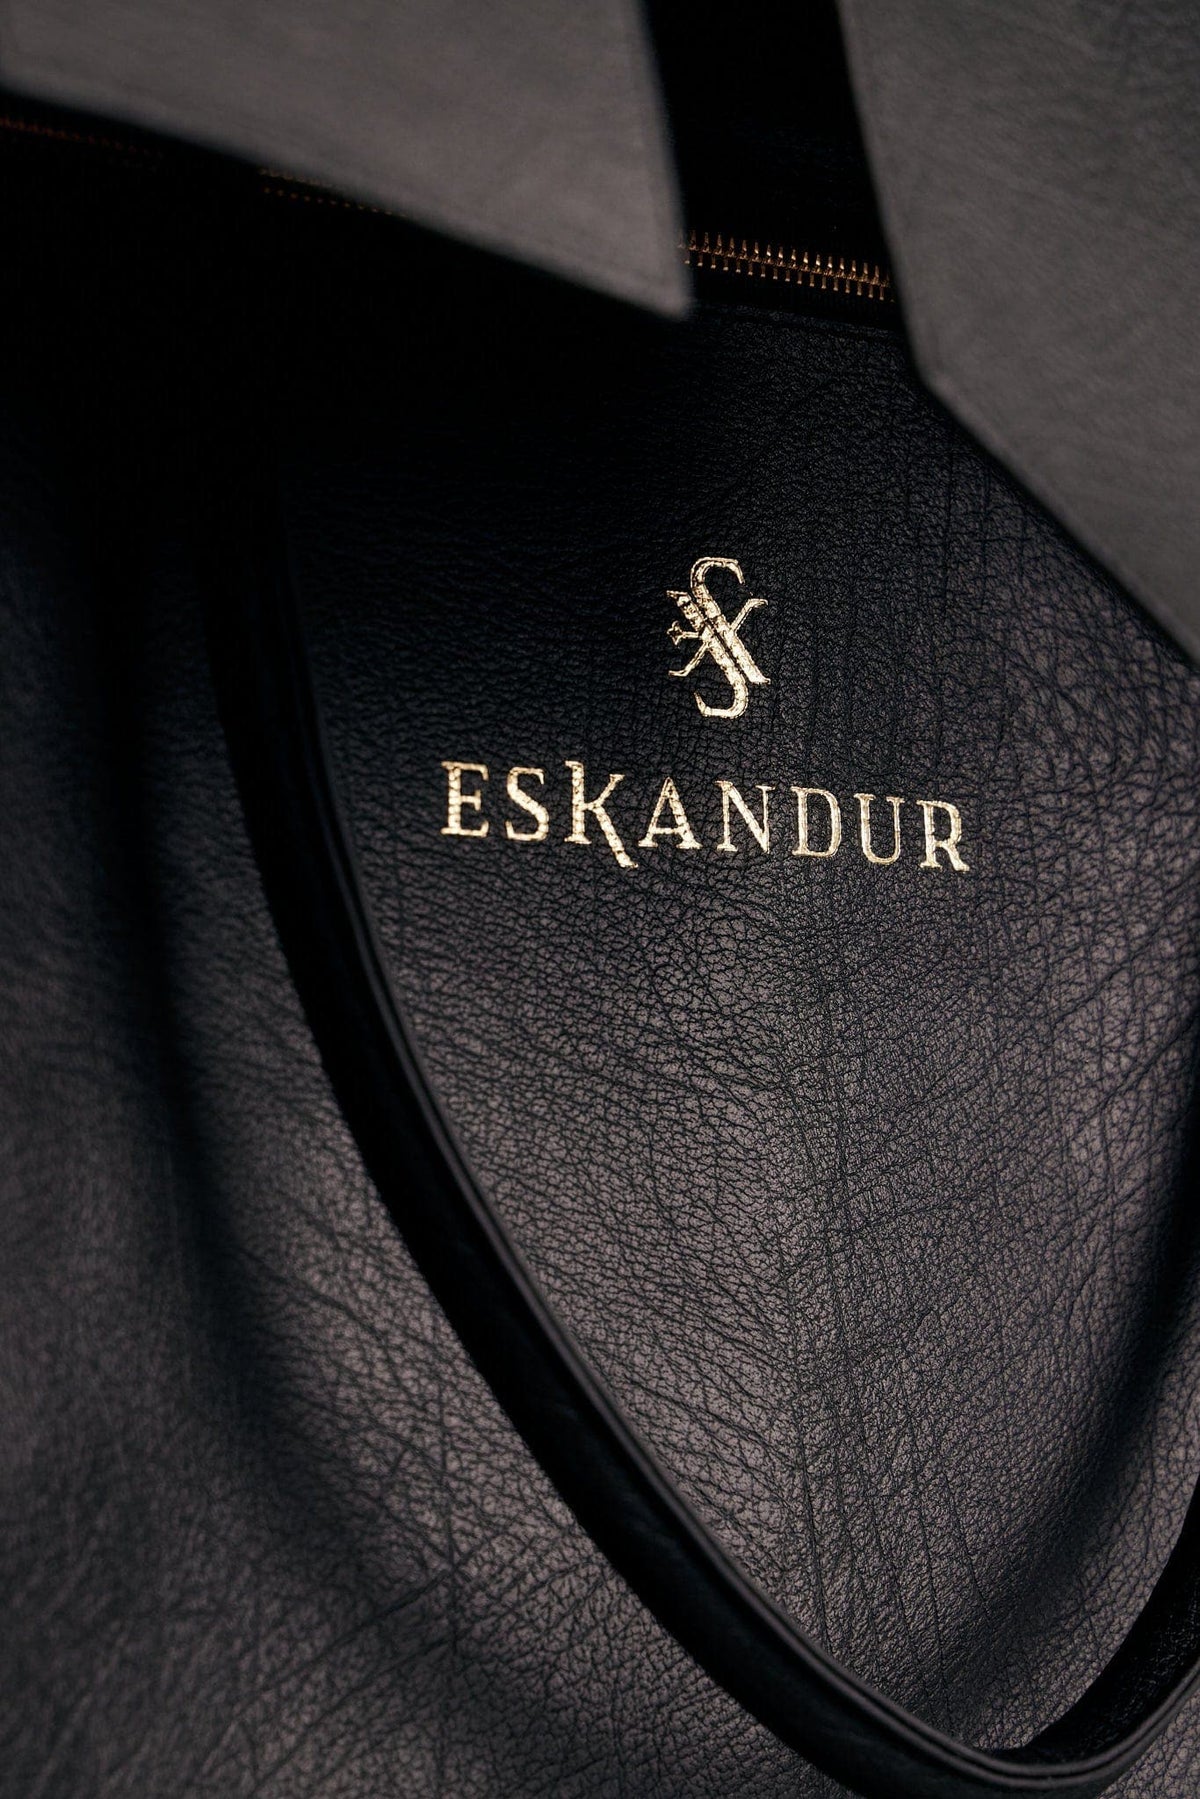 Eskandur Black Leather luxury garment bag with handles